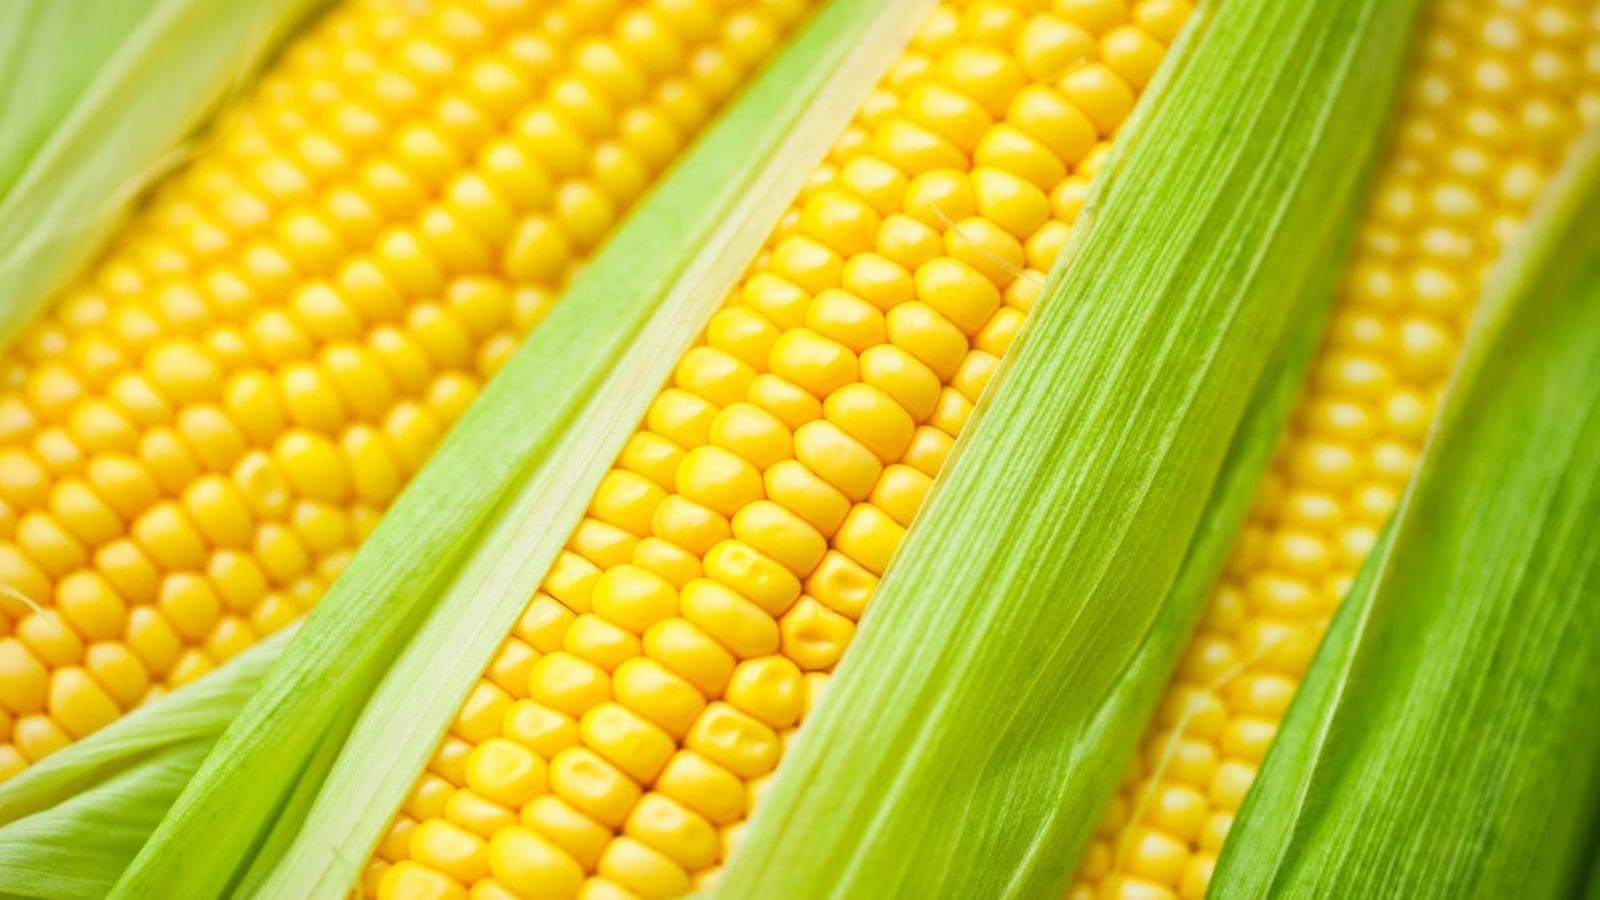 Australia, New Zealand seek public input on GMO corn for food use